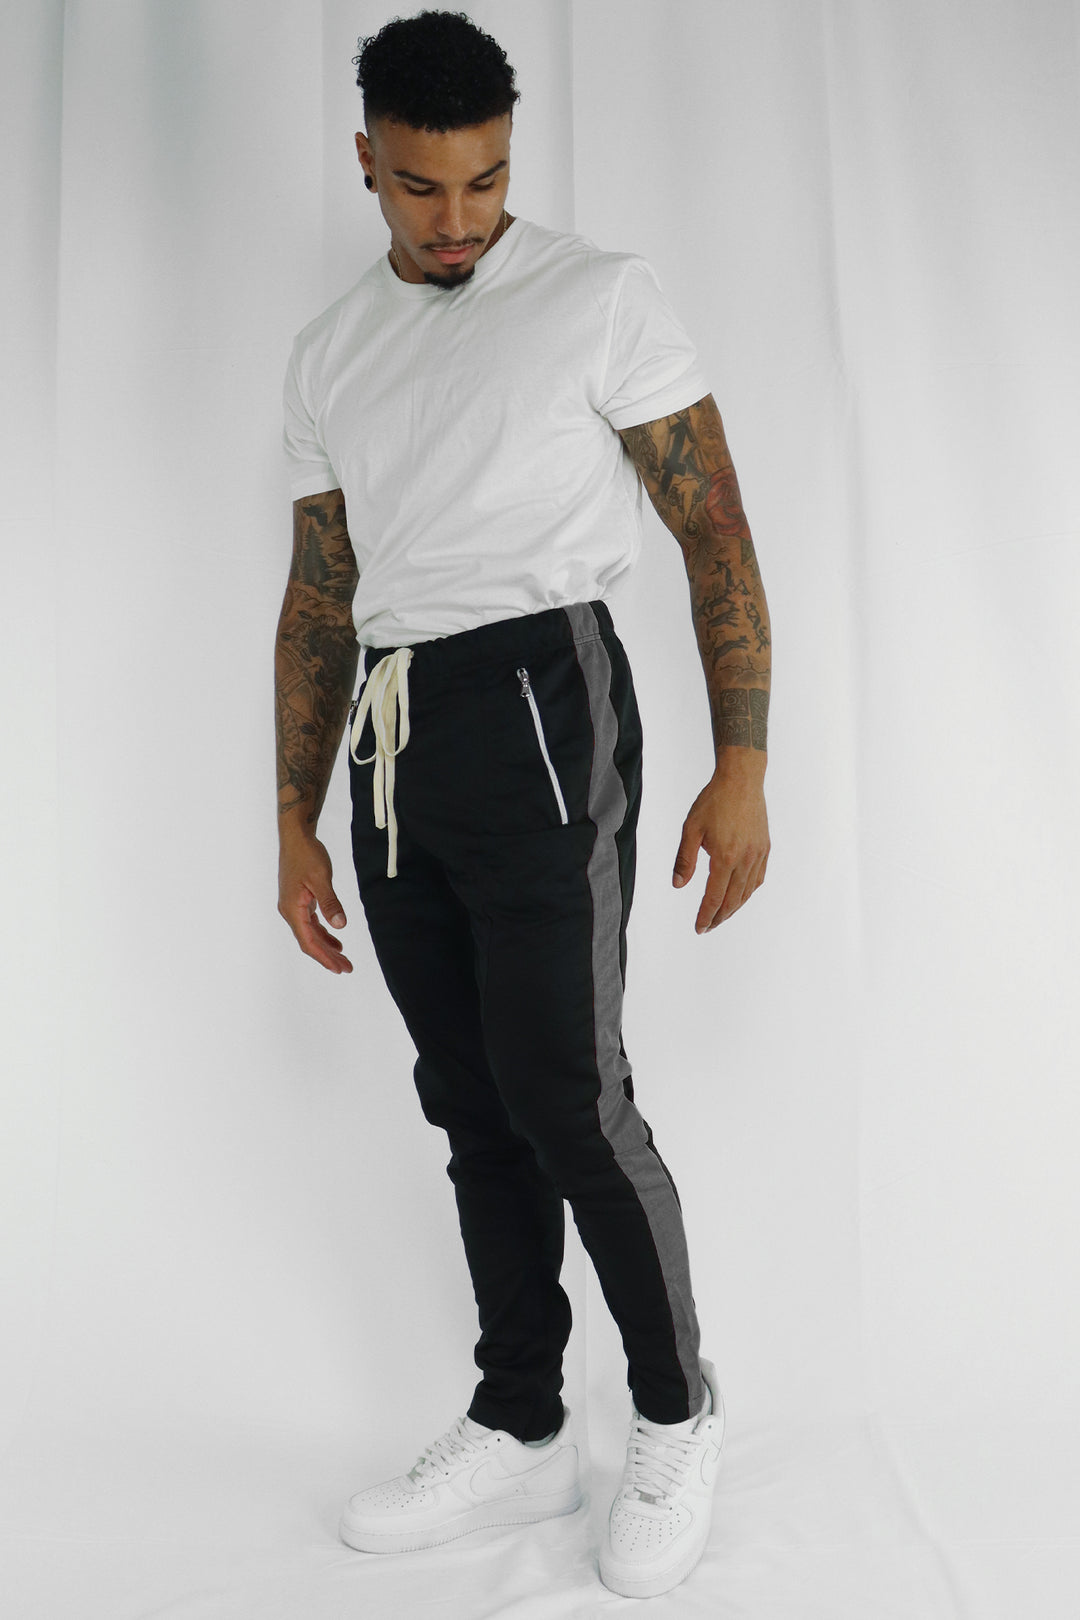 Premium Side Stripe Zip Pocket Track Pants (Black-Charcoal) - Zamage